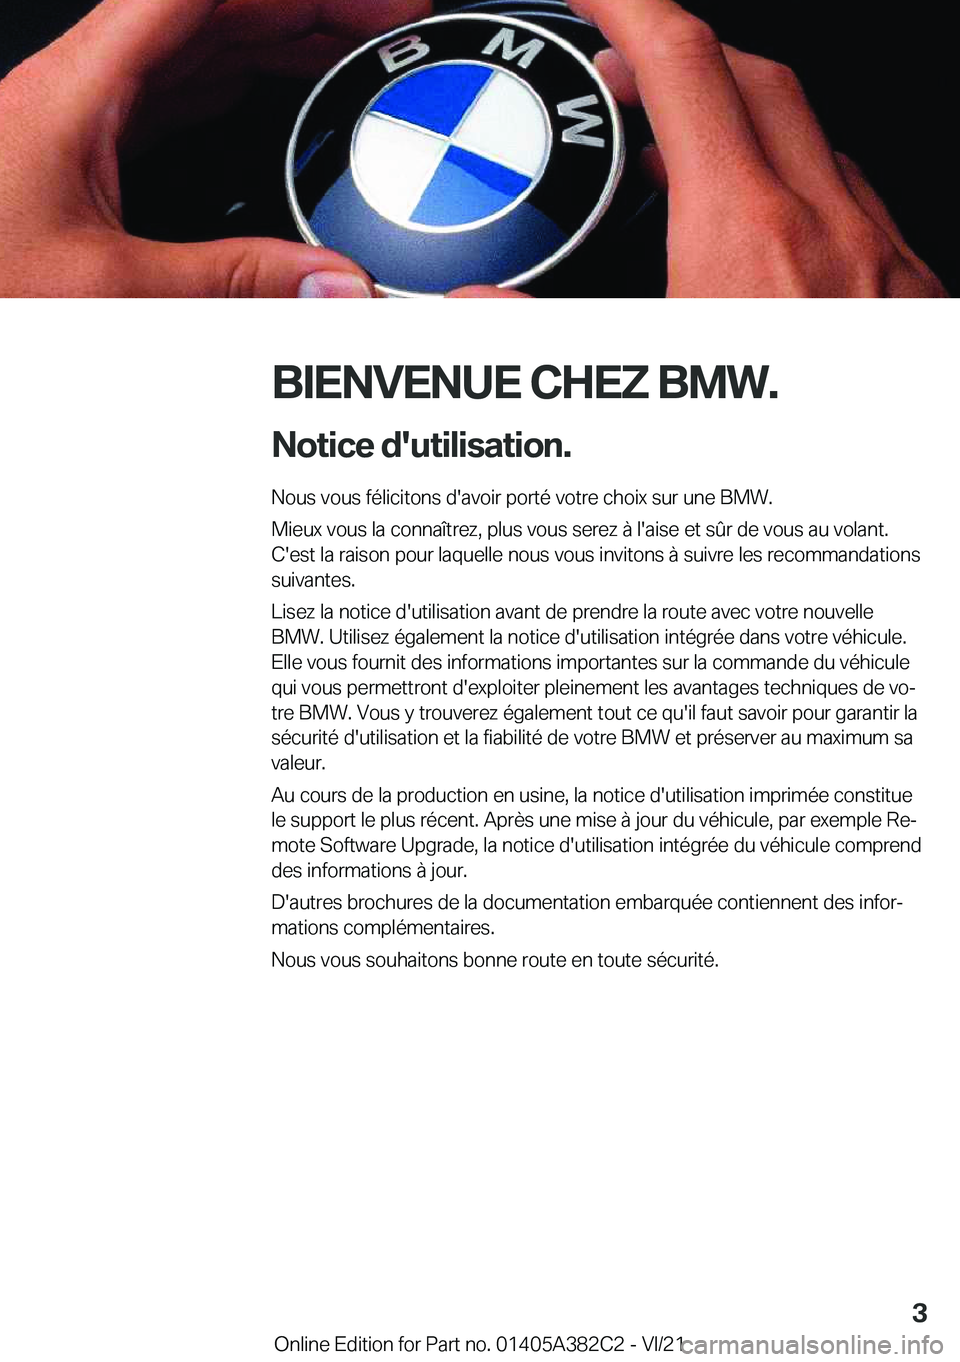 BMW Z4 2022  Notices Demploi (in French) �B�I�E�N�V�E�N�U�E��C�H�E�Z��B�M�W�.�N�o�t�i�c�e��d�'�u�t�i�l�i�s�a�t�i�o�n�.
�N�o�u�s��v�o�u�s��f�é�l�i�c�i�t�o�n�s��d�'�a�v�o�i�r��p�o�r�t�é��v�o�t�r�e��c�h�o�i�x��s�u�r��u�n�e�